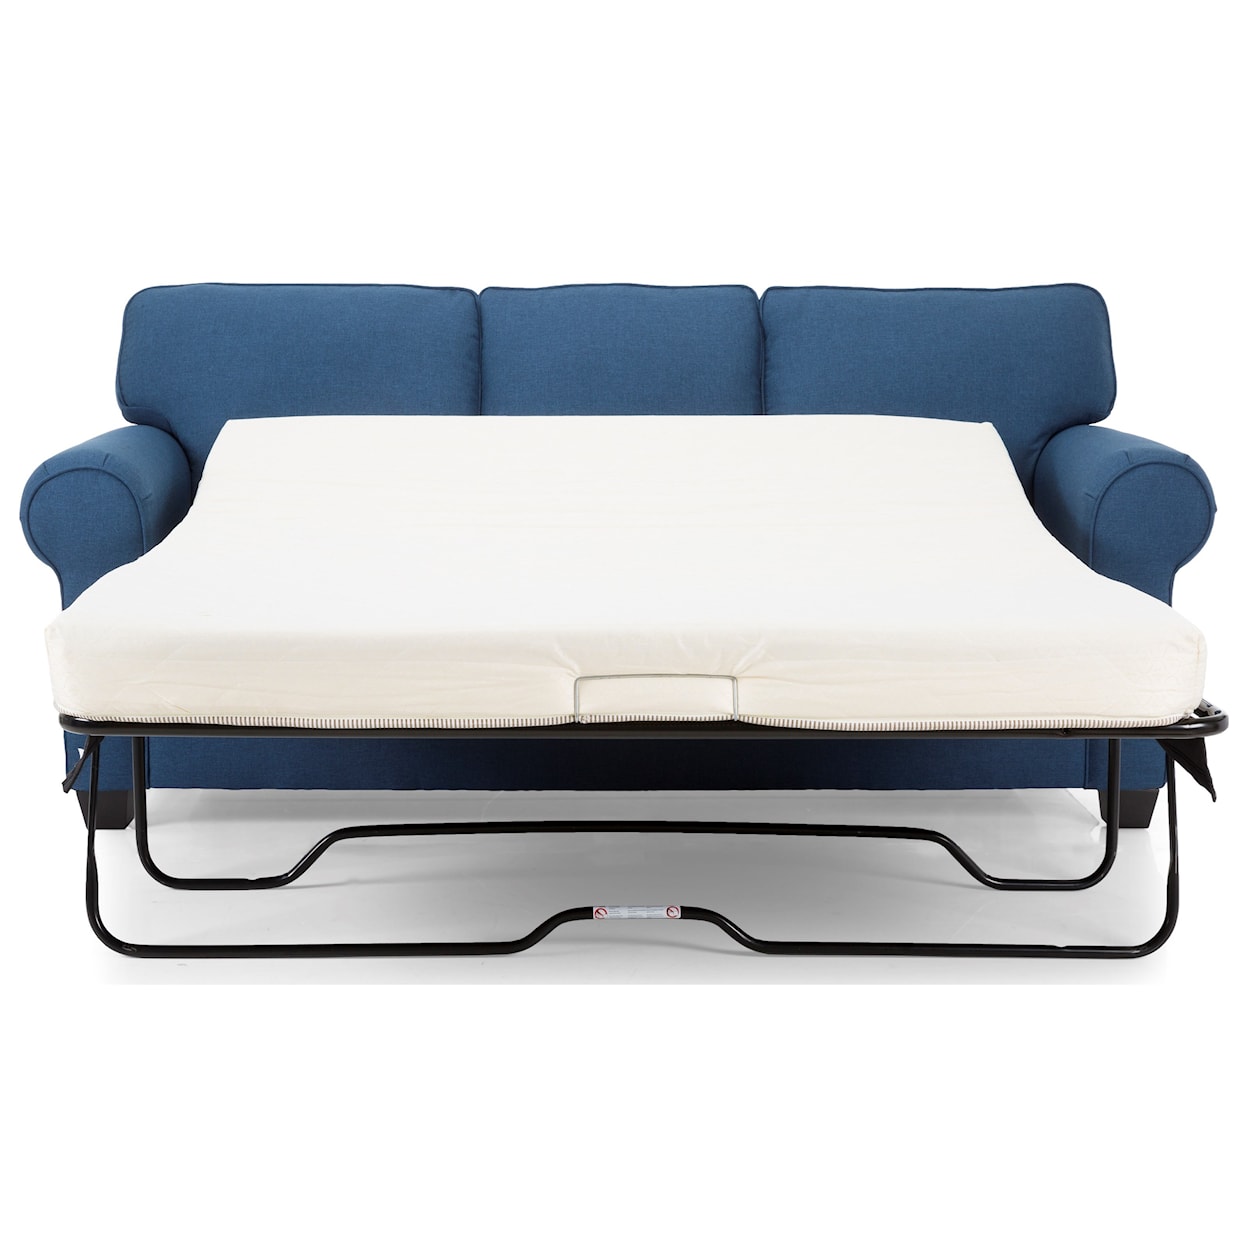 Taelor Designs Porter Queen Bed Sofa